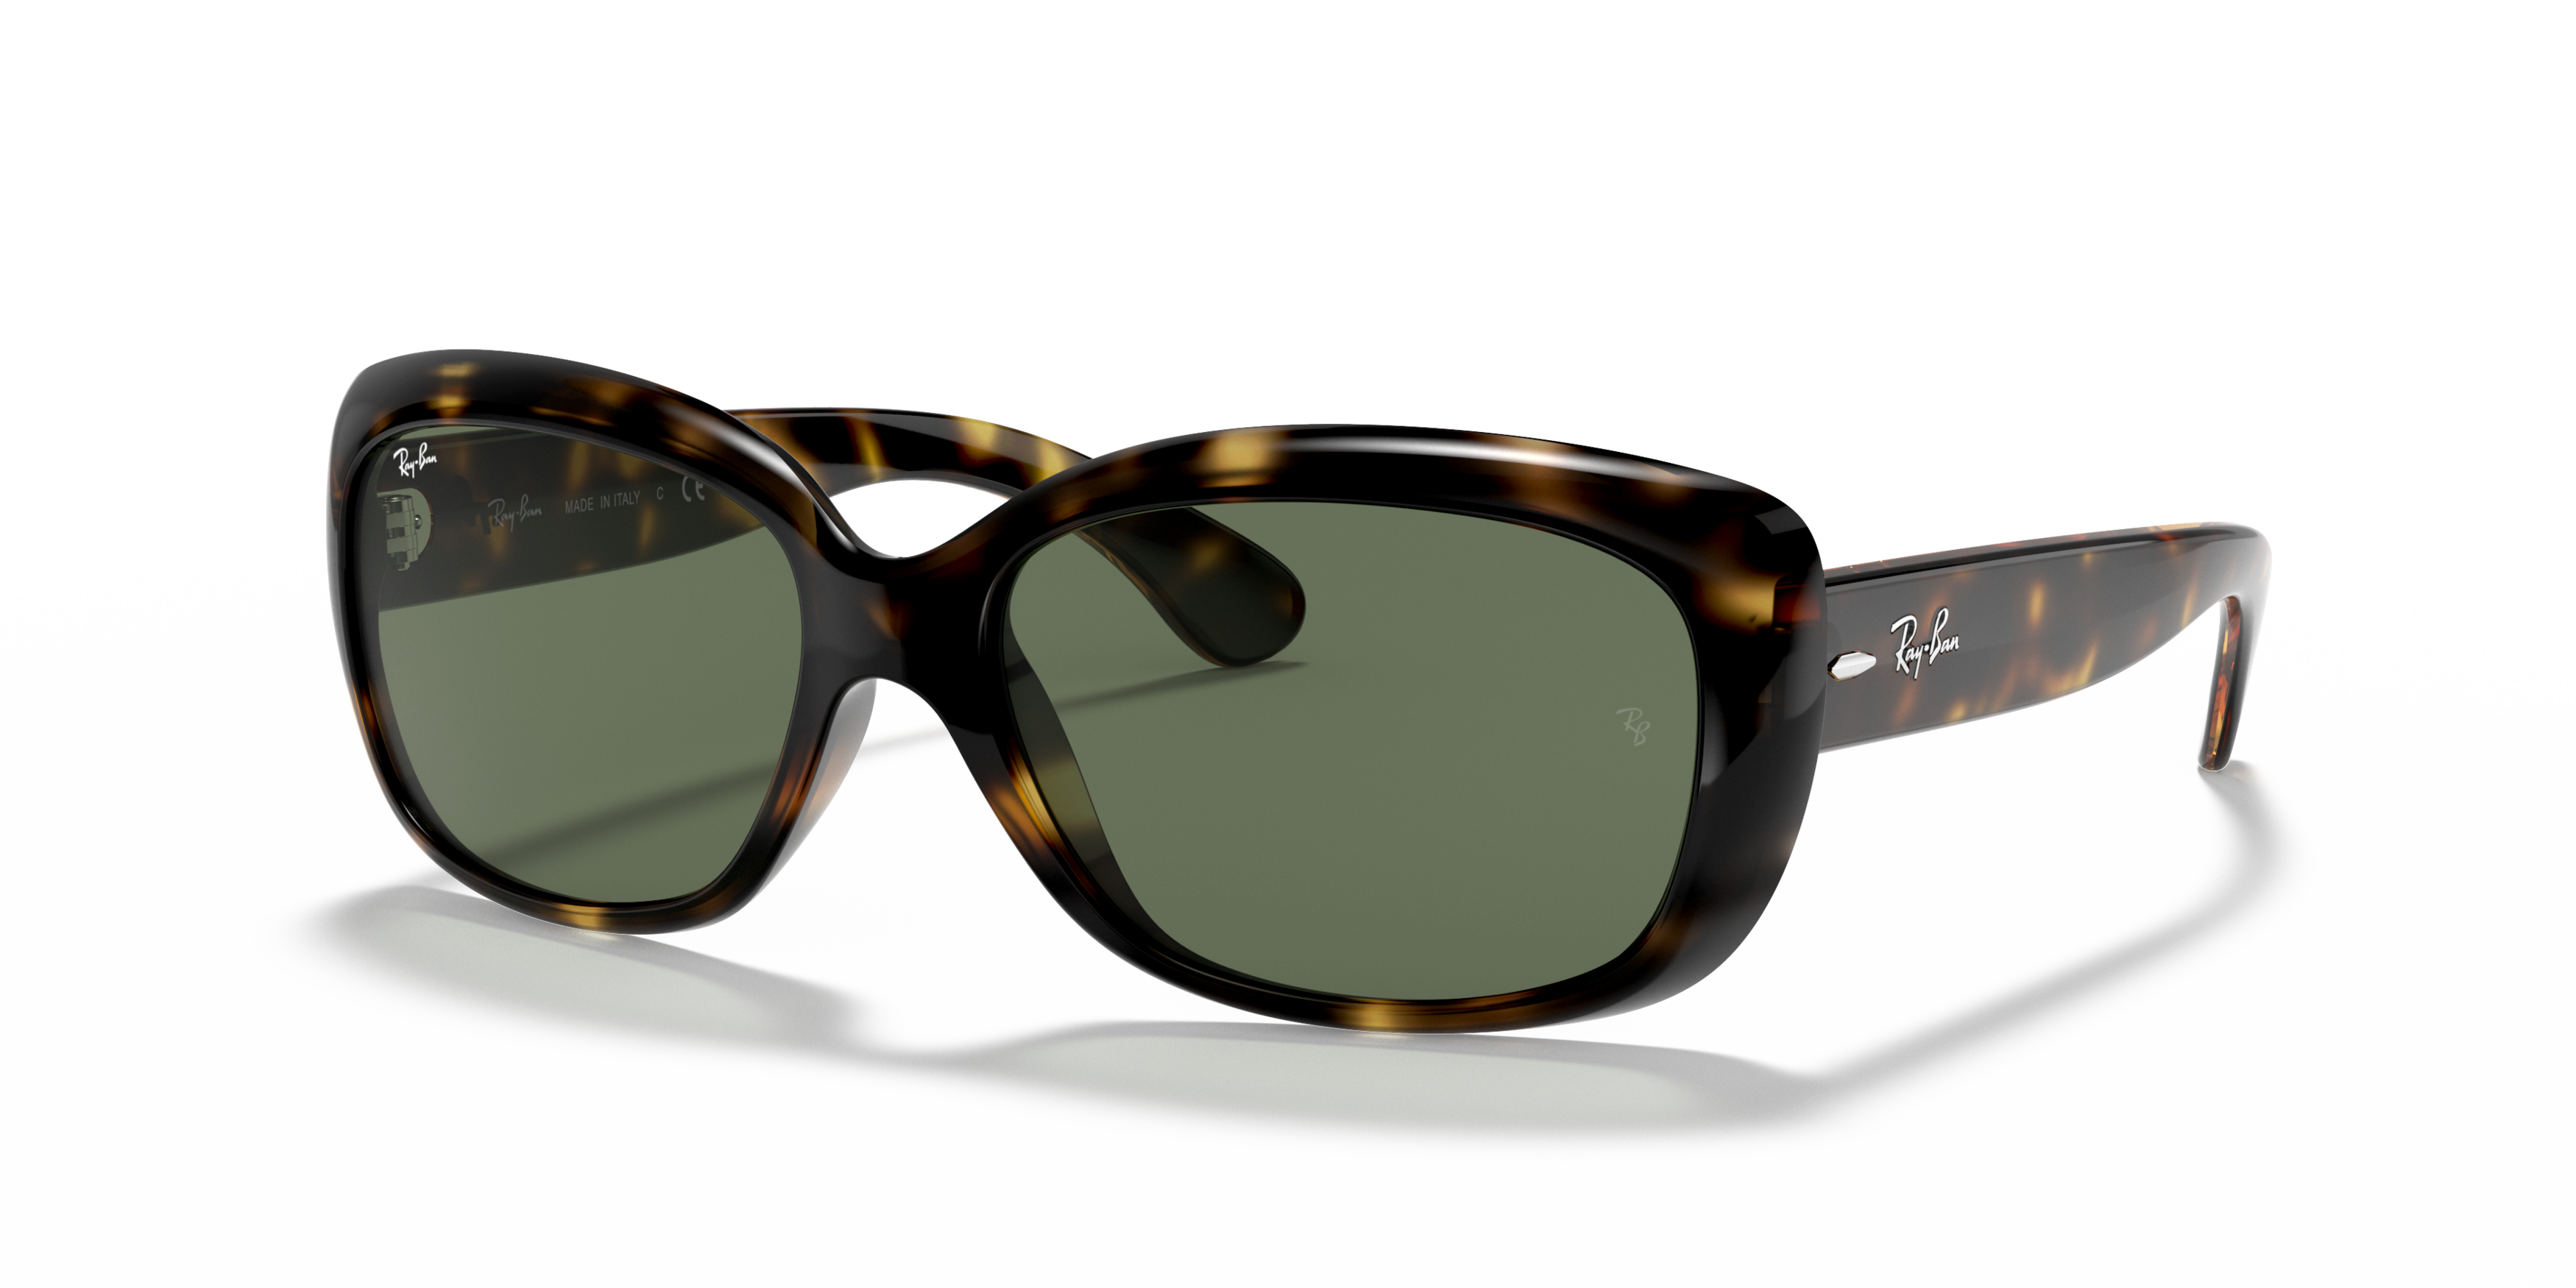 Angle_Left01 Ray-Ban Jackie Ohh RB 4101 Sunglasses Green / Tortoise Shell